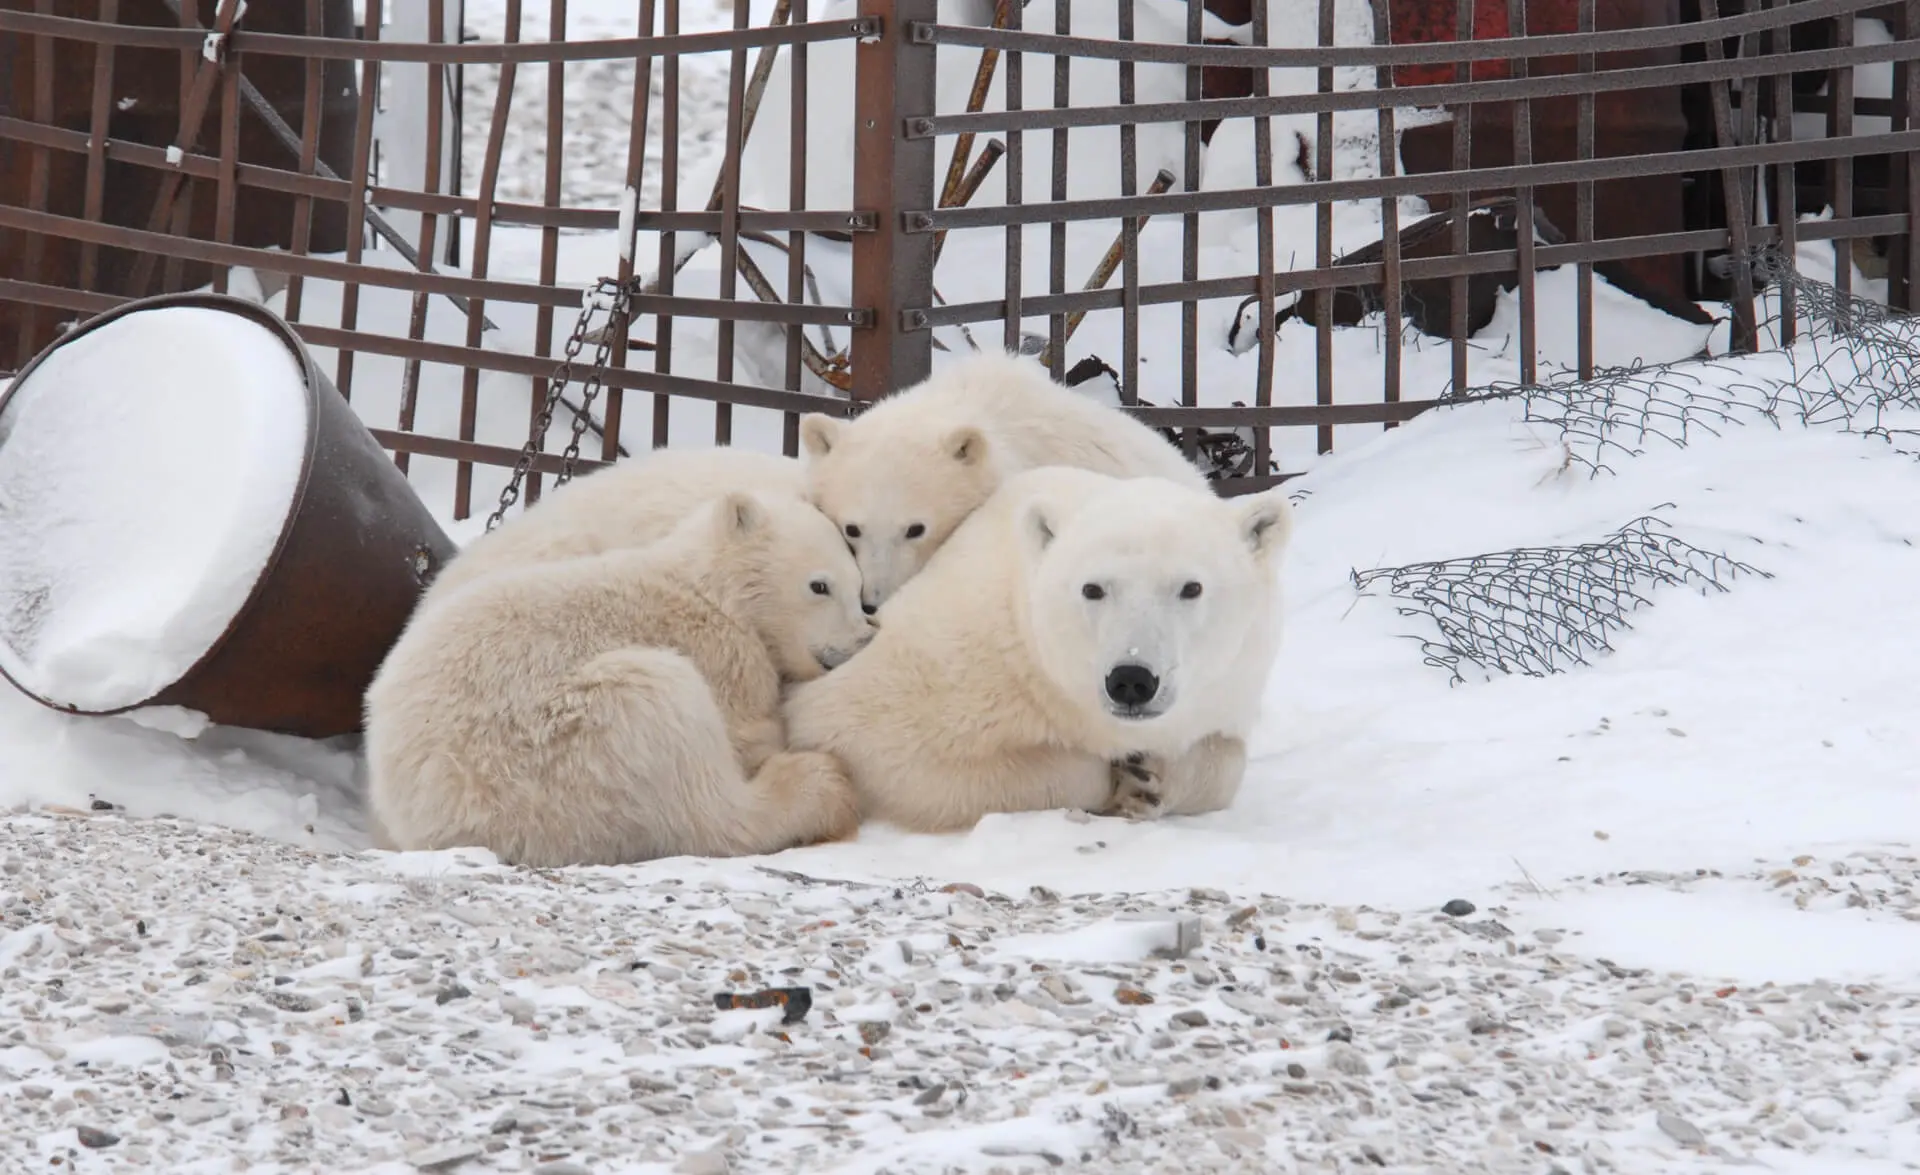 Churchill aims to be the world’s first “polar bear safe community”